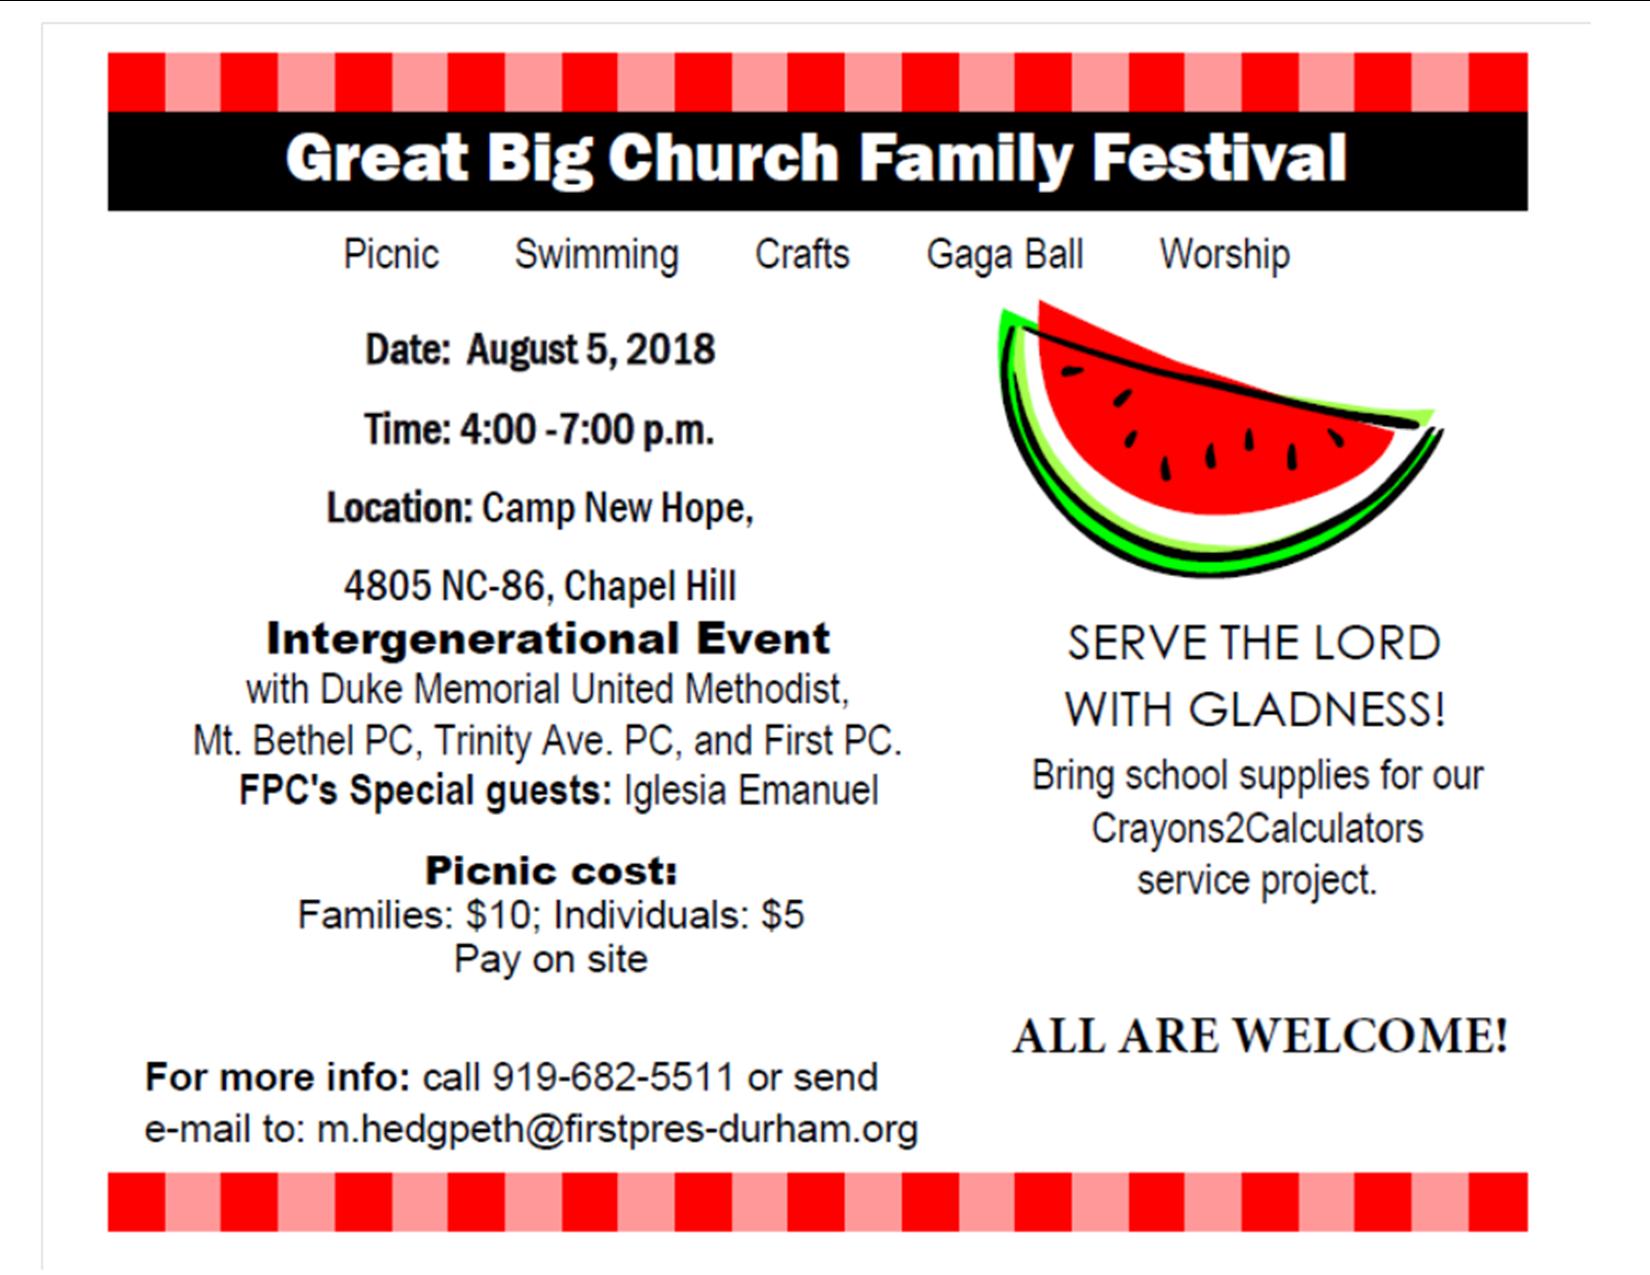 Great Big Church Family Festival “Reunion”